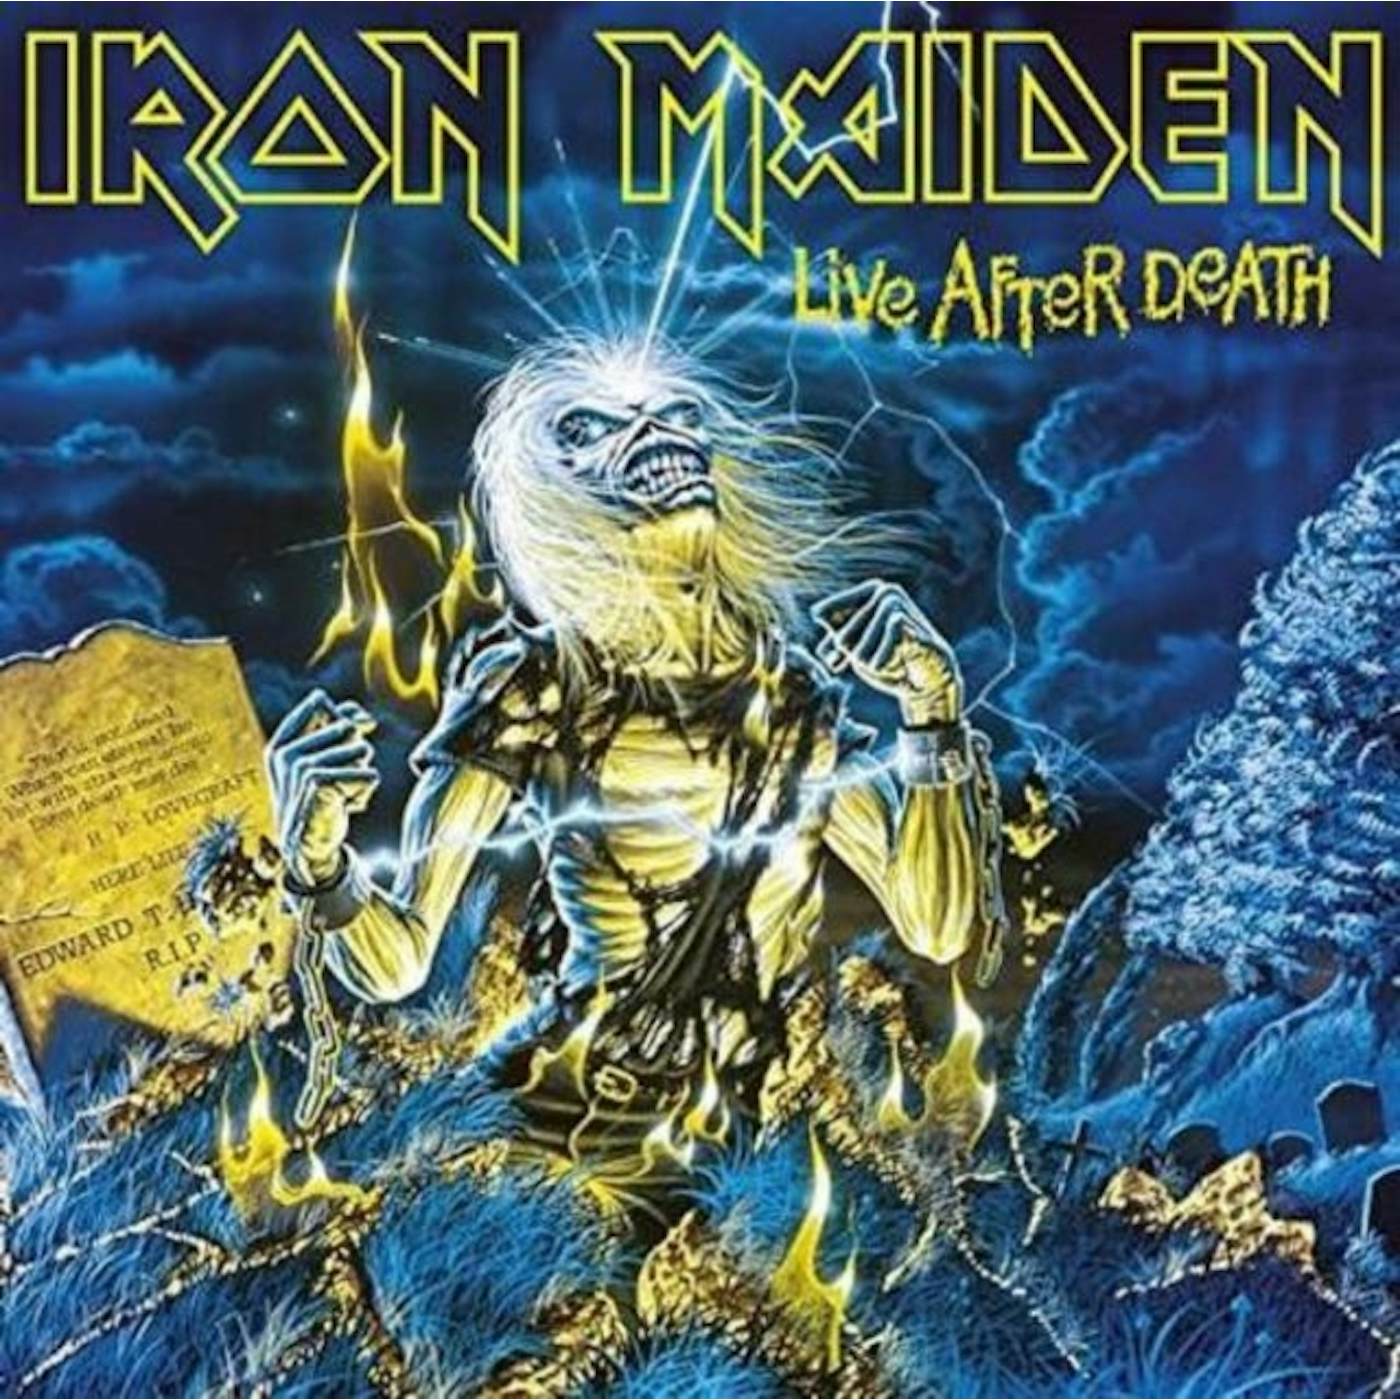 Iron Maiden LP Vinyl Record - Live After Death